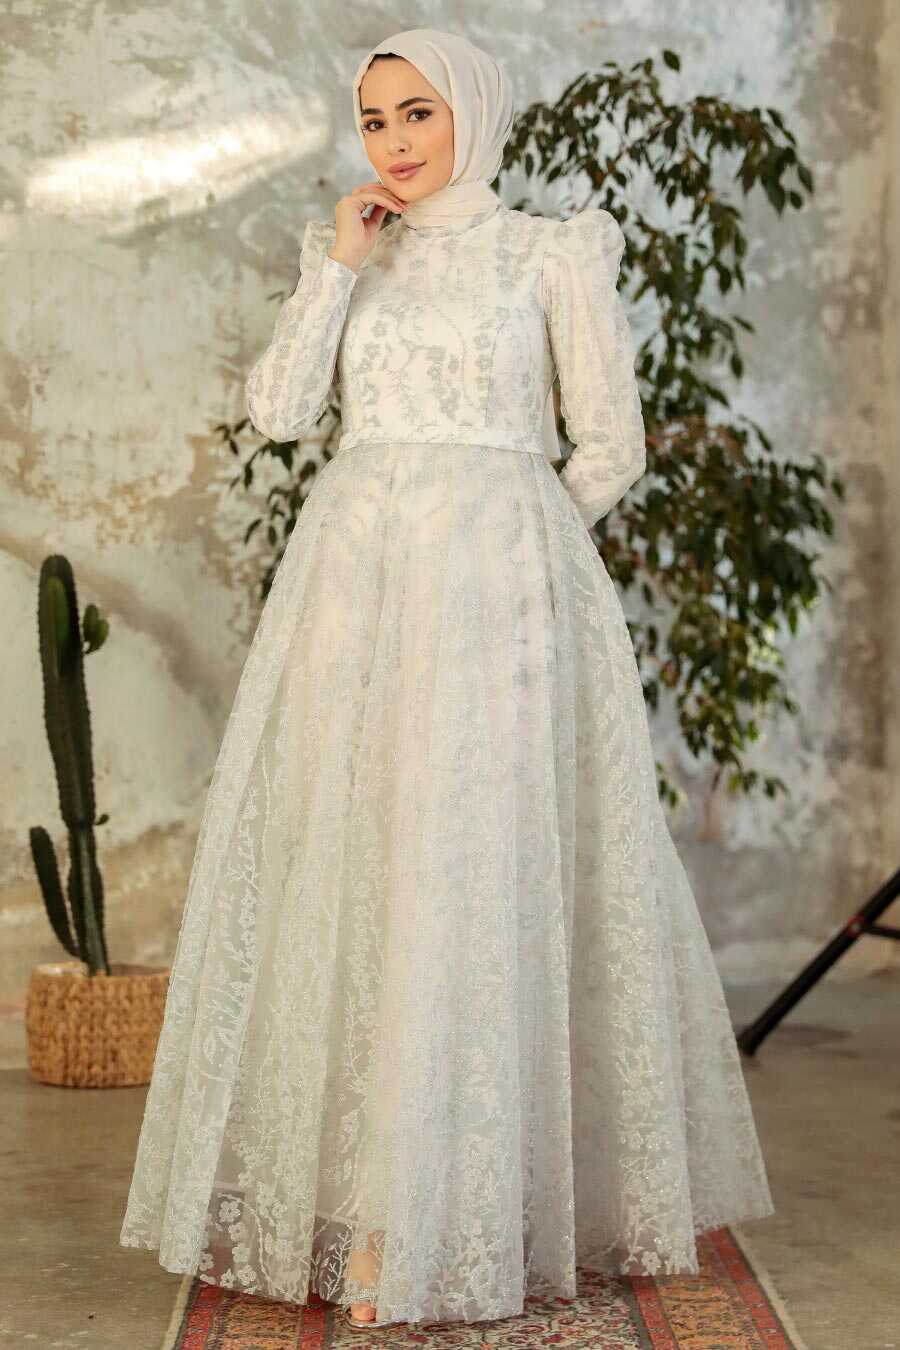 Neva Style - Luxury White Muslim Wedding Dress 22780B